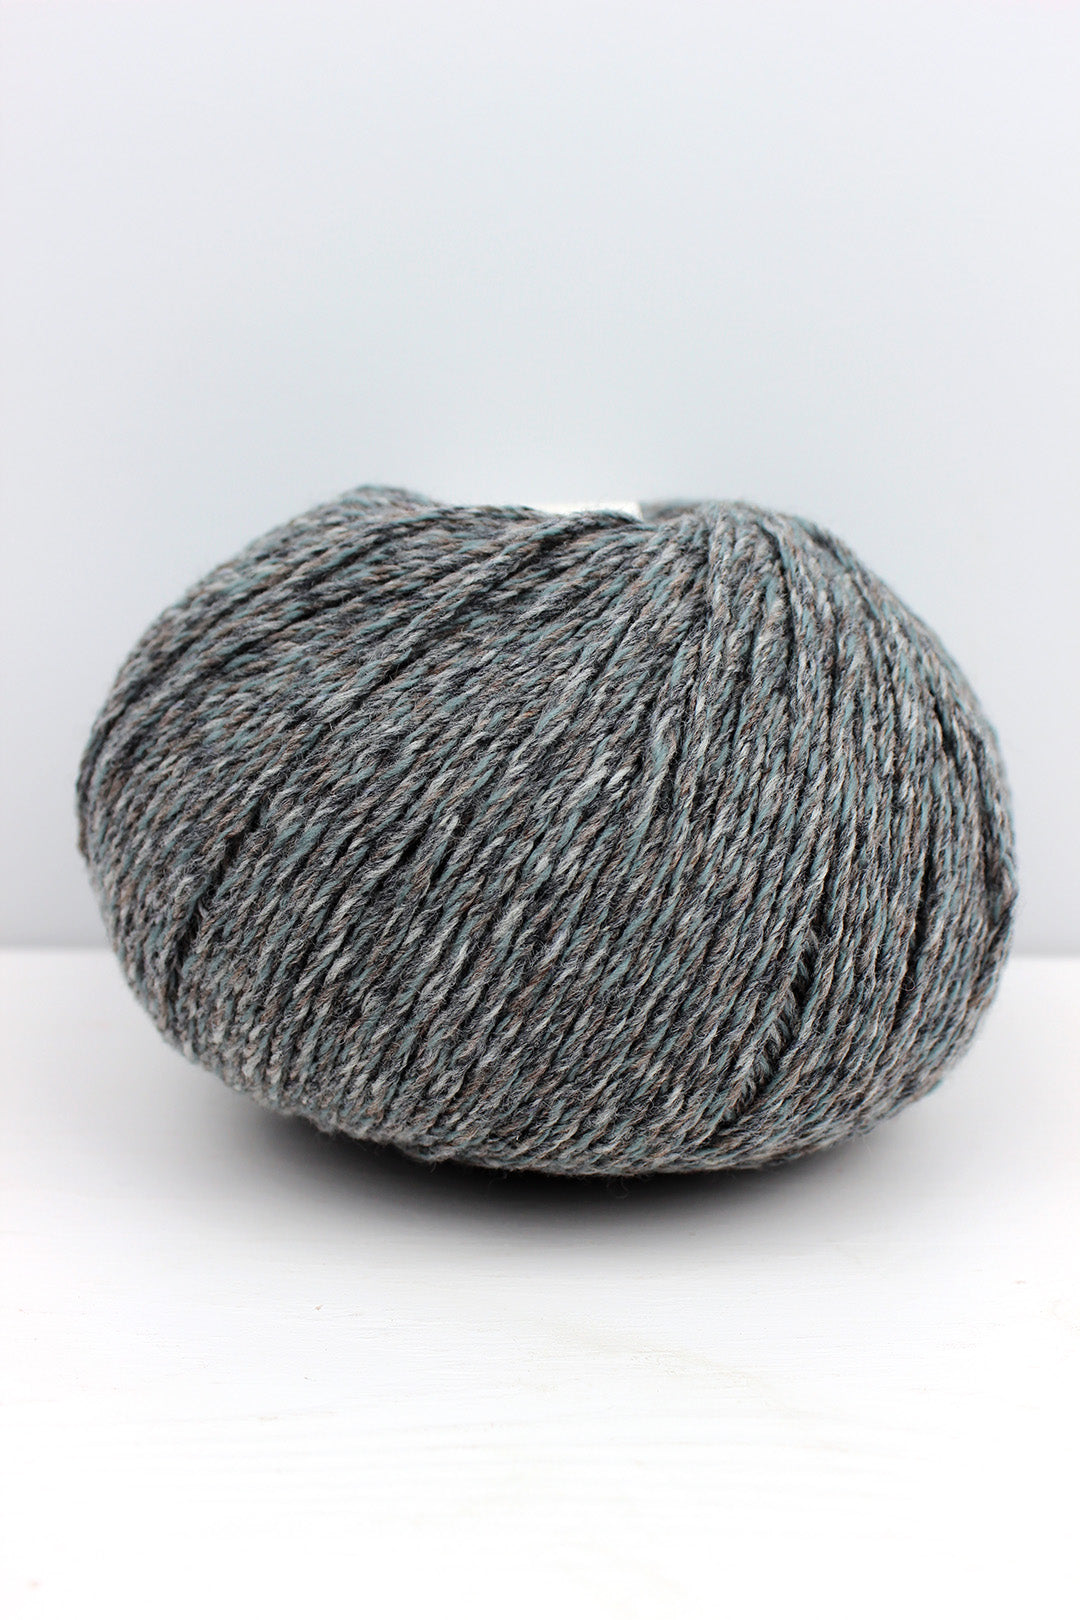 Di Gilpin aran weight yarn in Storm colourway. Scottish Textiles Showcase